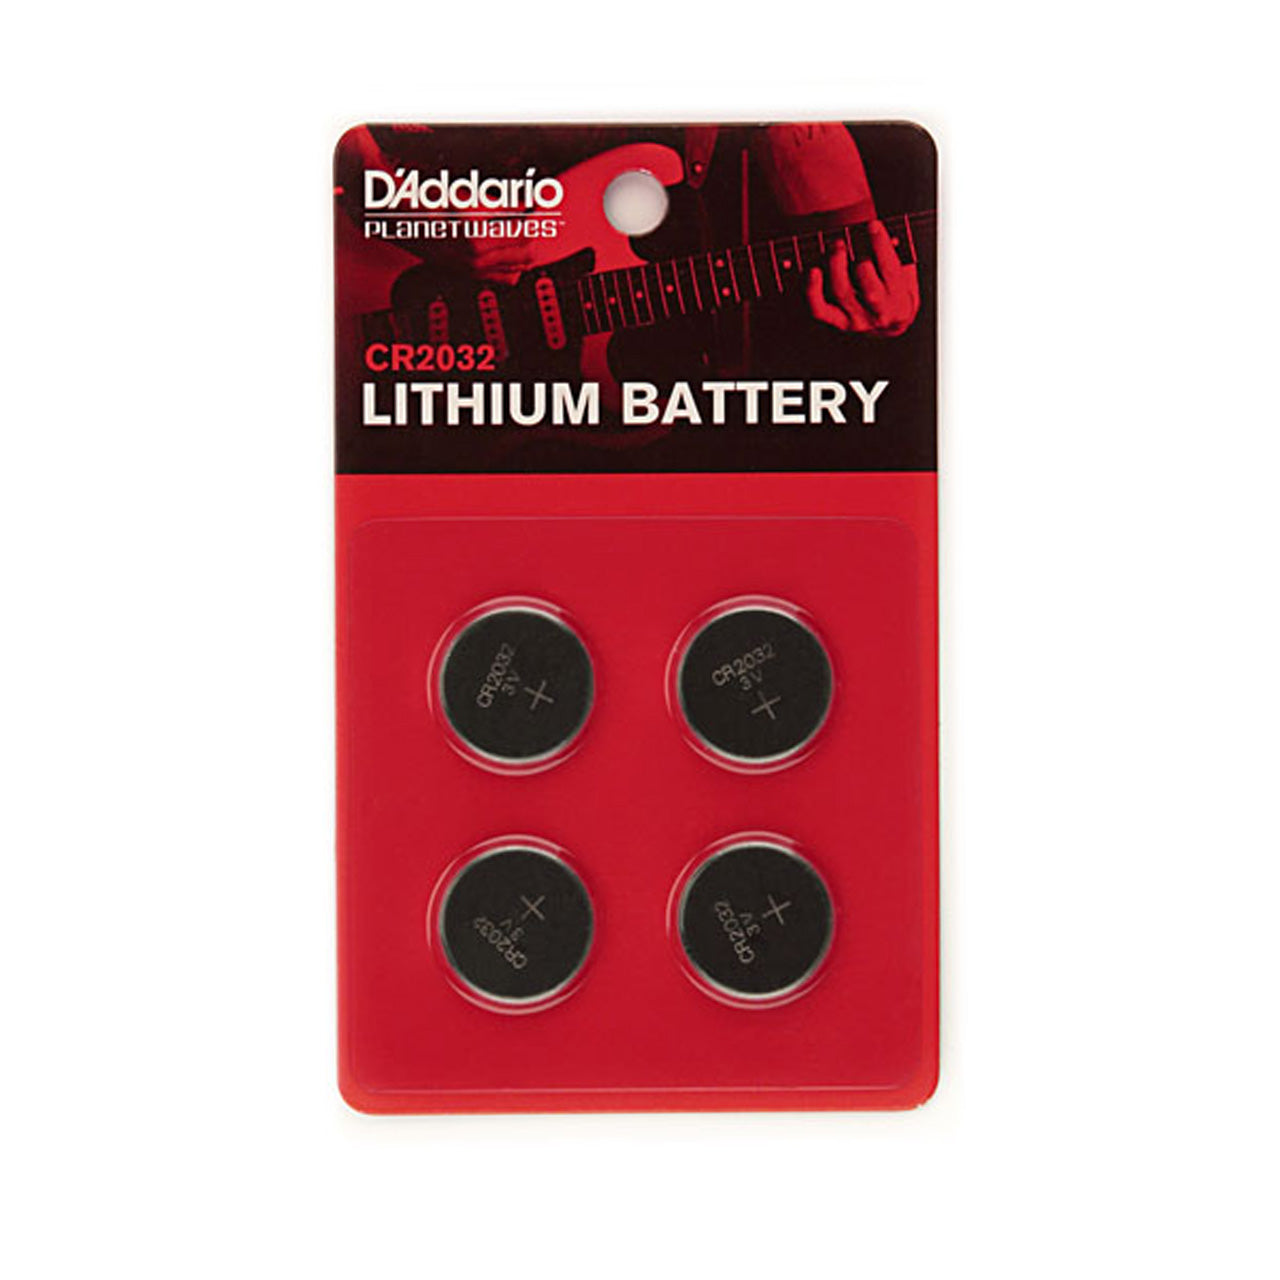 D’Addario CR2032 3 volt lithium batteries - 4 pack